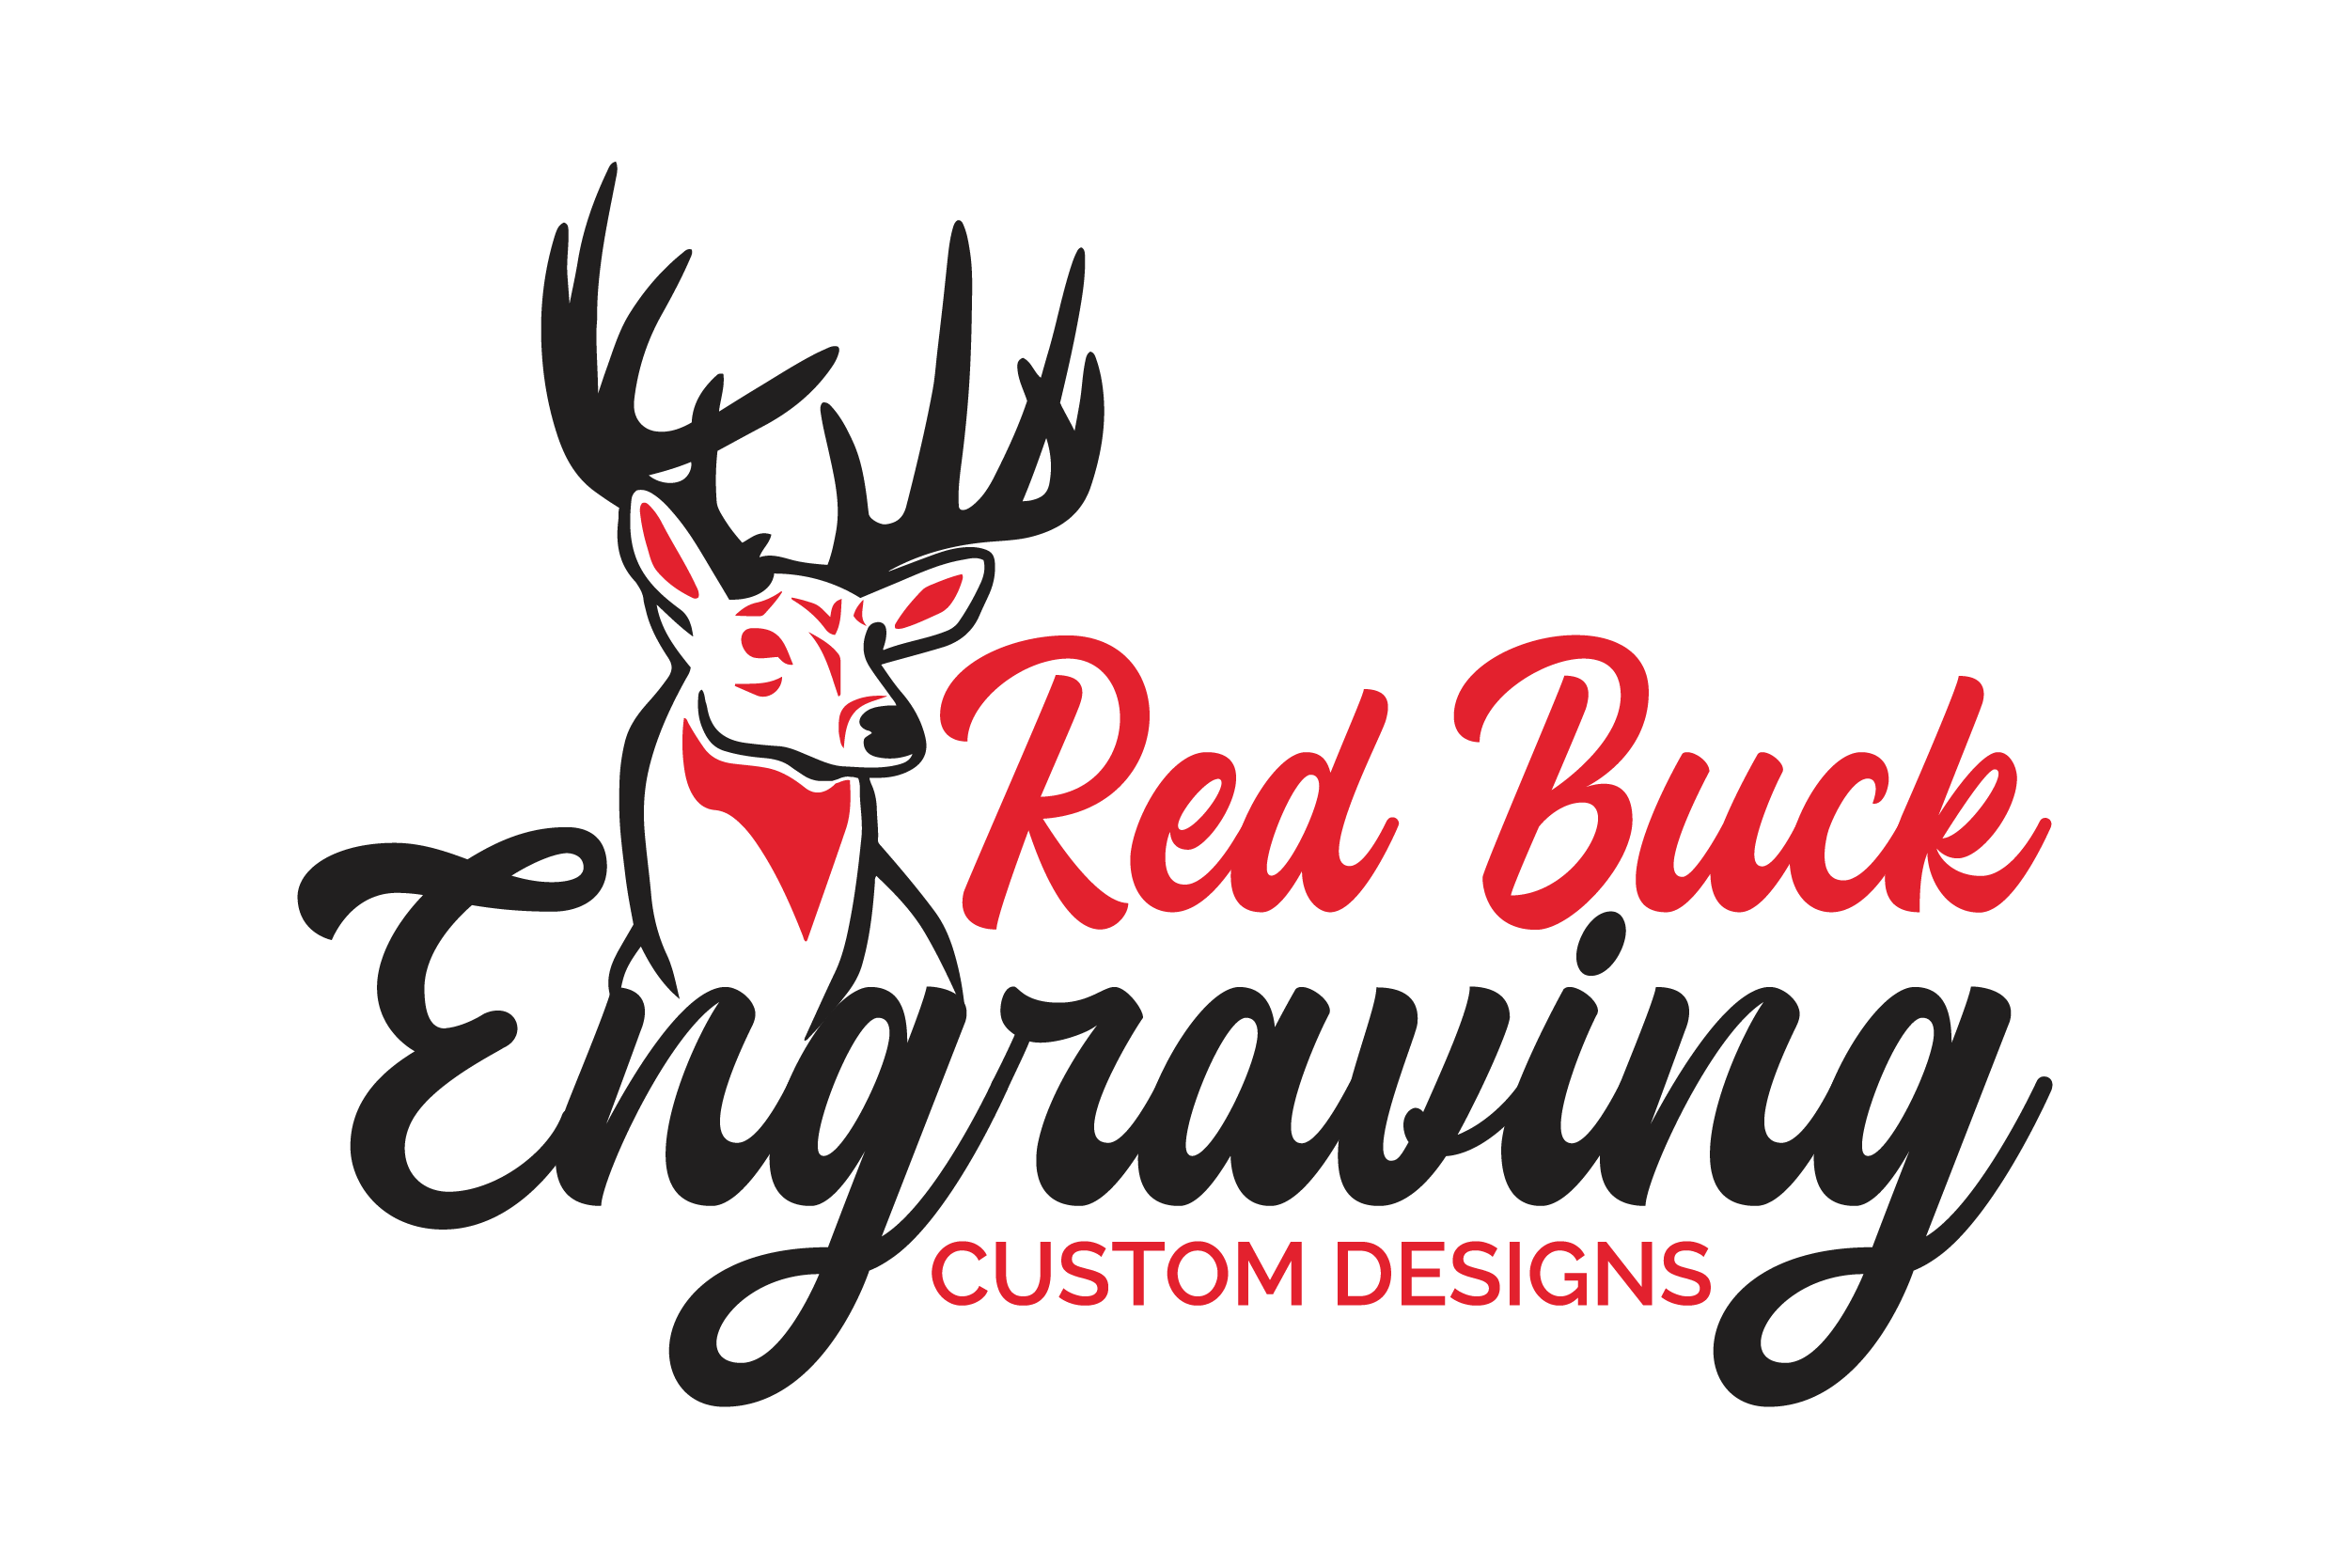 Red Buck Engraving